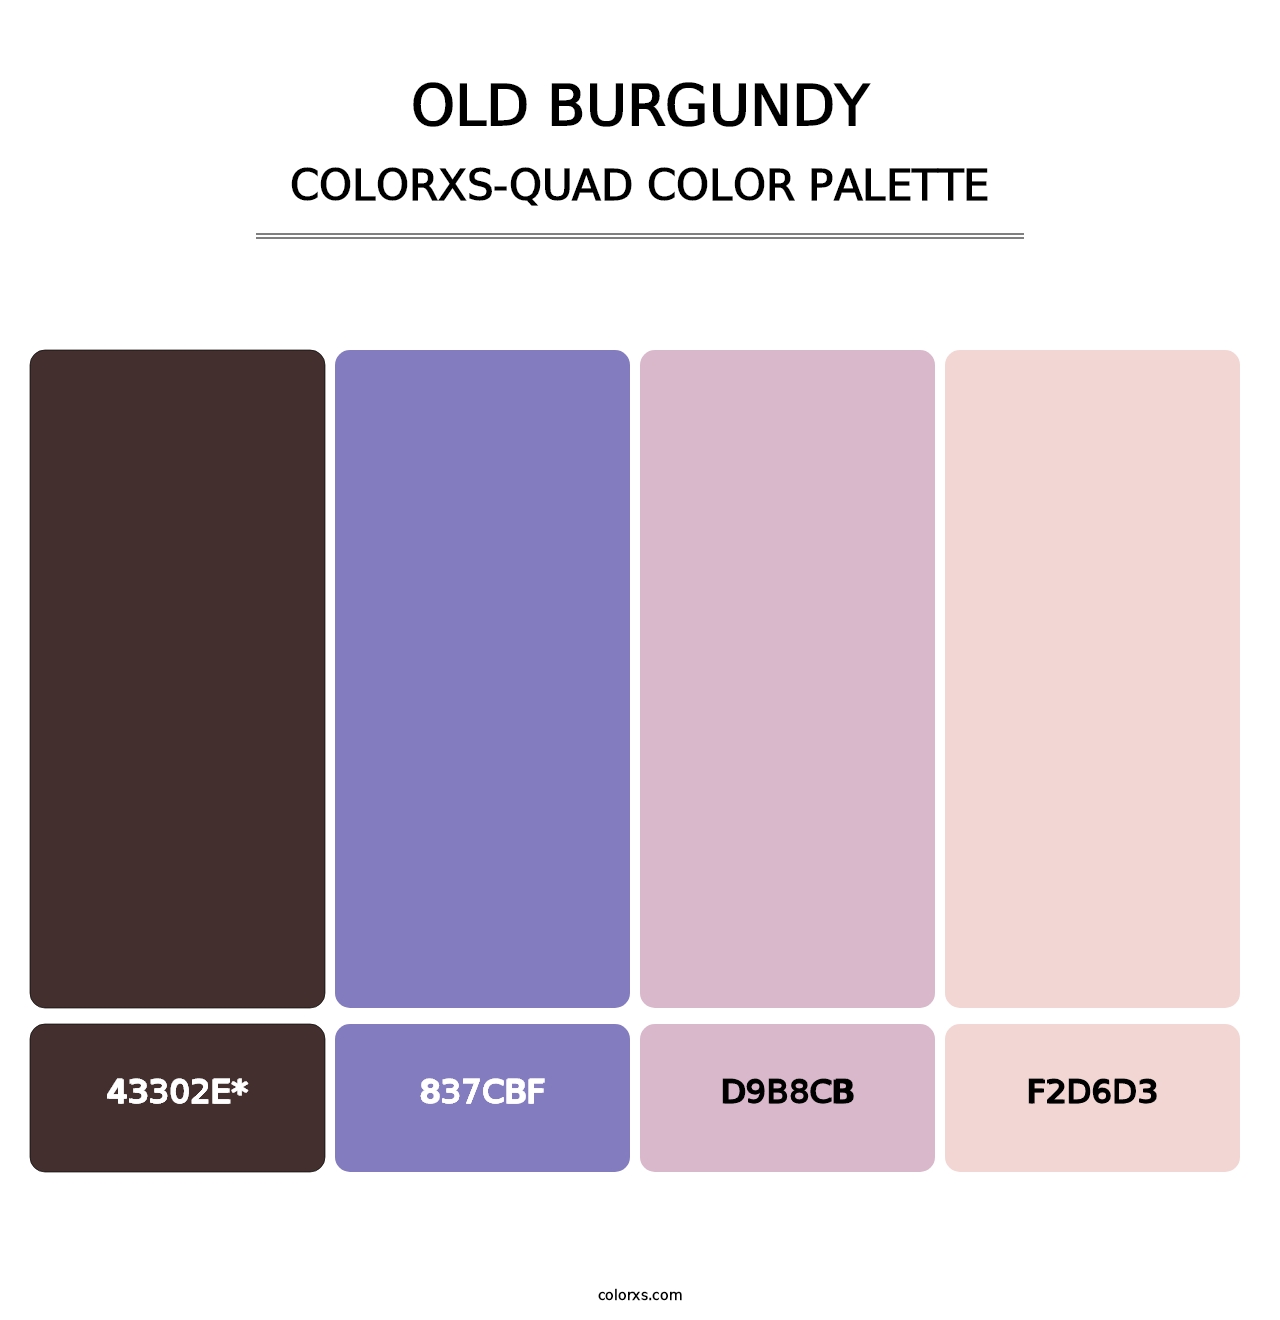 Old Burgundy - Colorxs Quad Palette